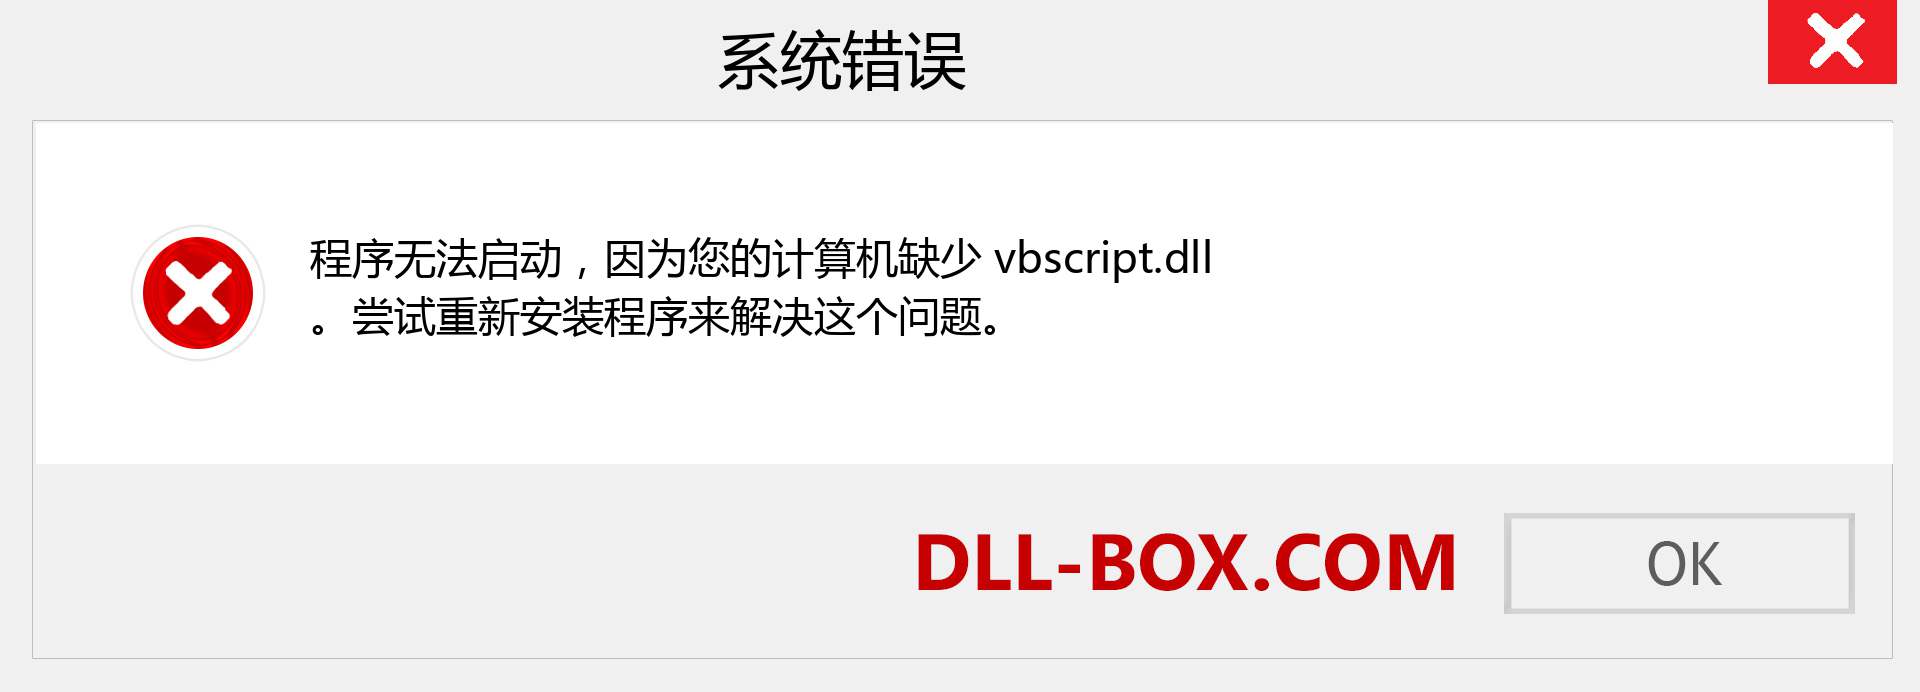 vbscript.dll 文件丢失？。 适用于 Windows 7、8、10 的下载 - 修复 Windows、照片、图像上的 vbscript dll 丢失错误